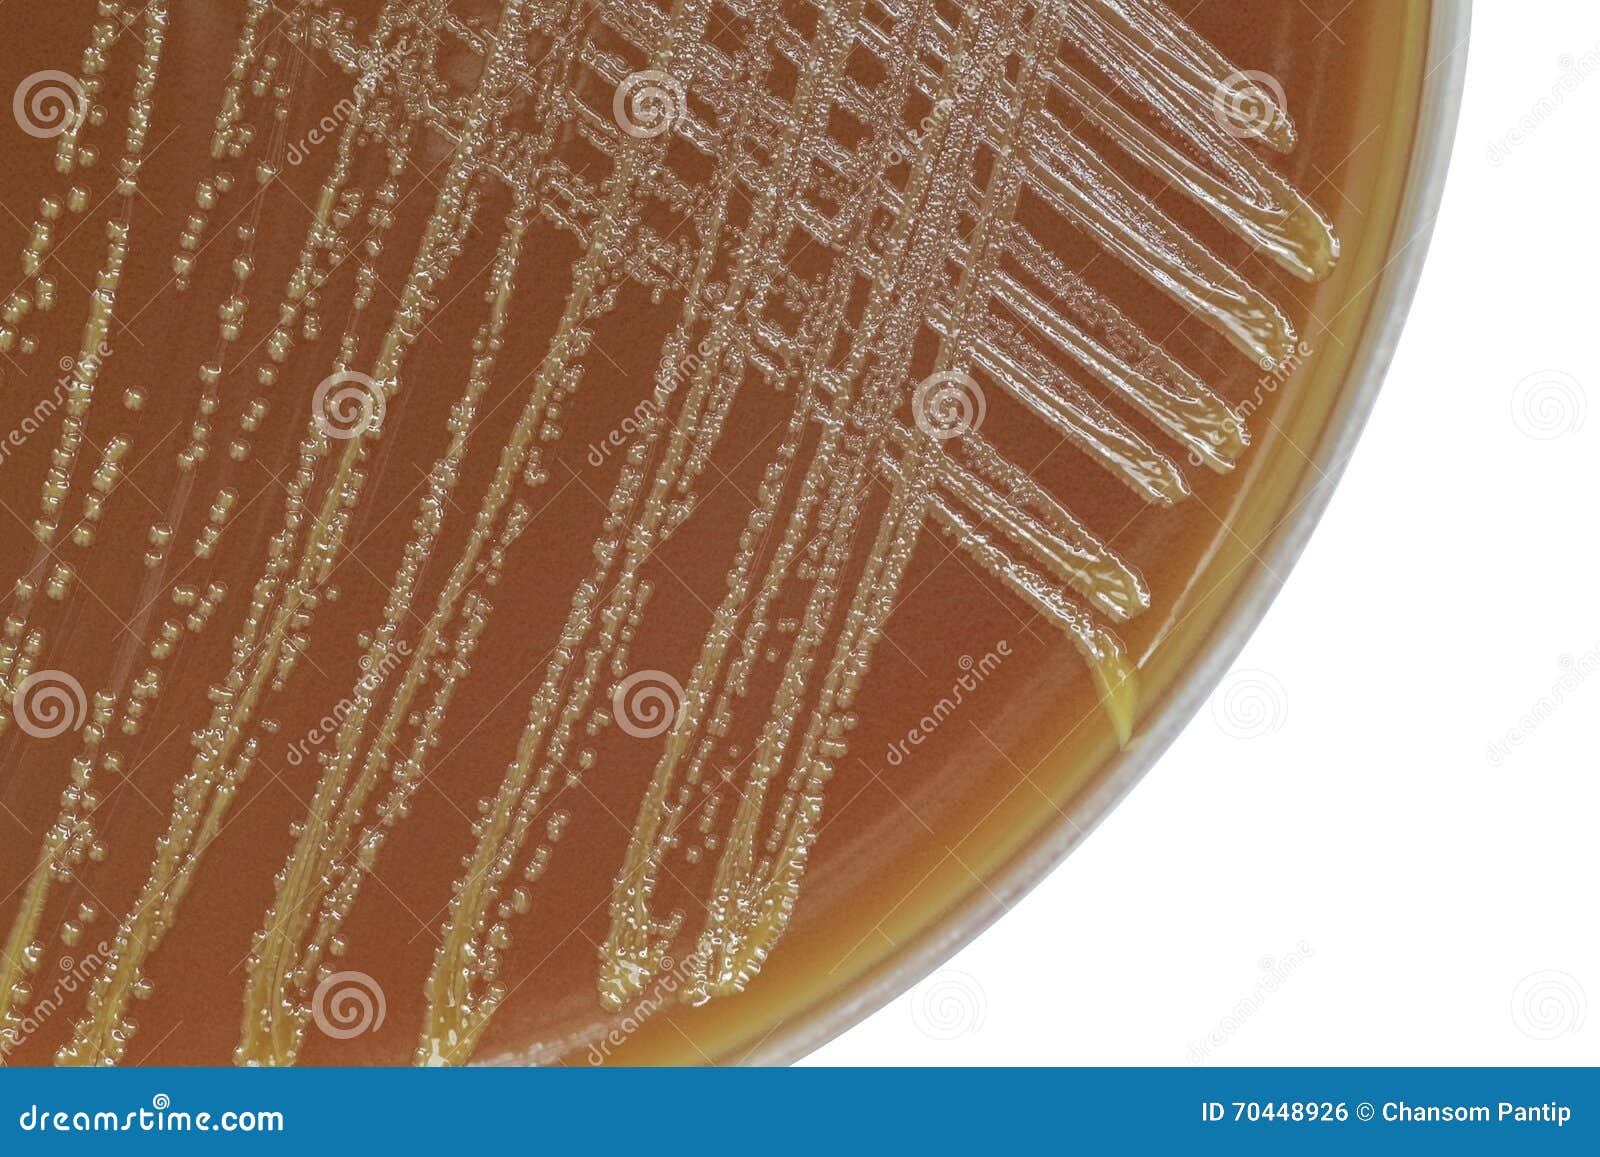 neisseria bacterial colonies on chocolate agar plate